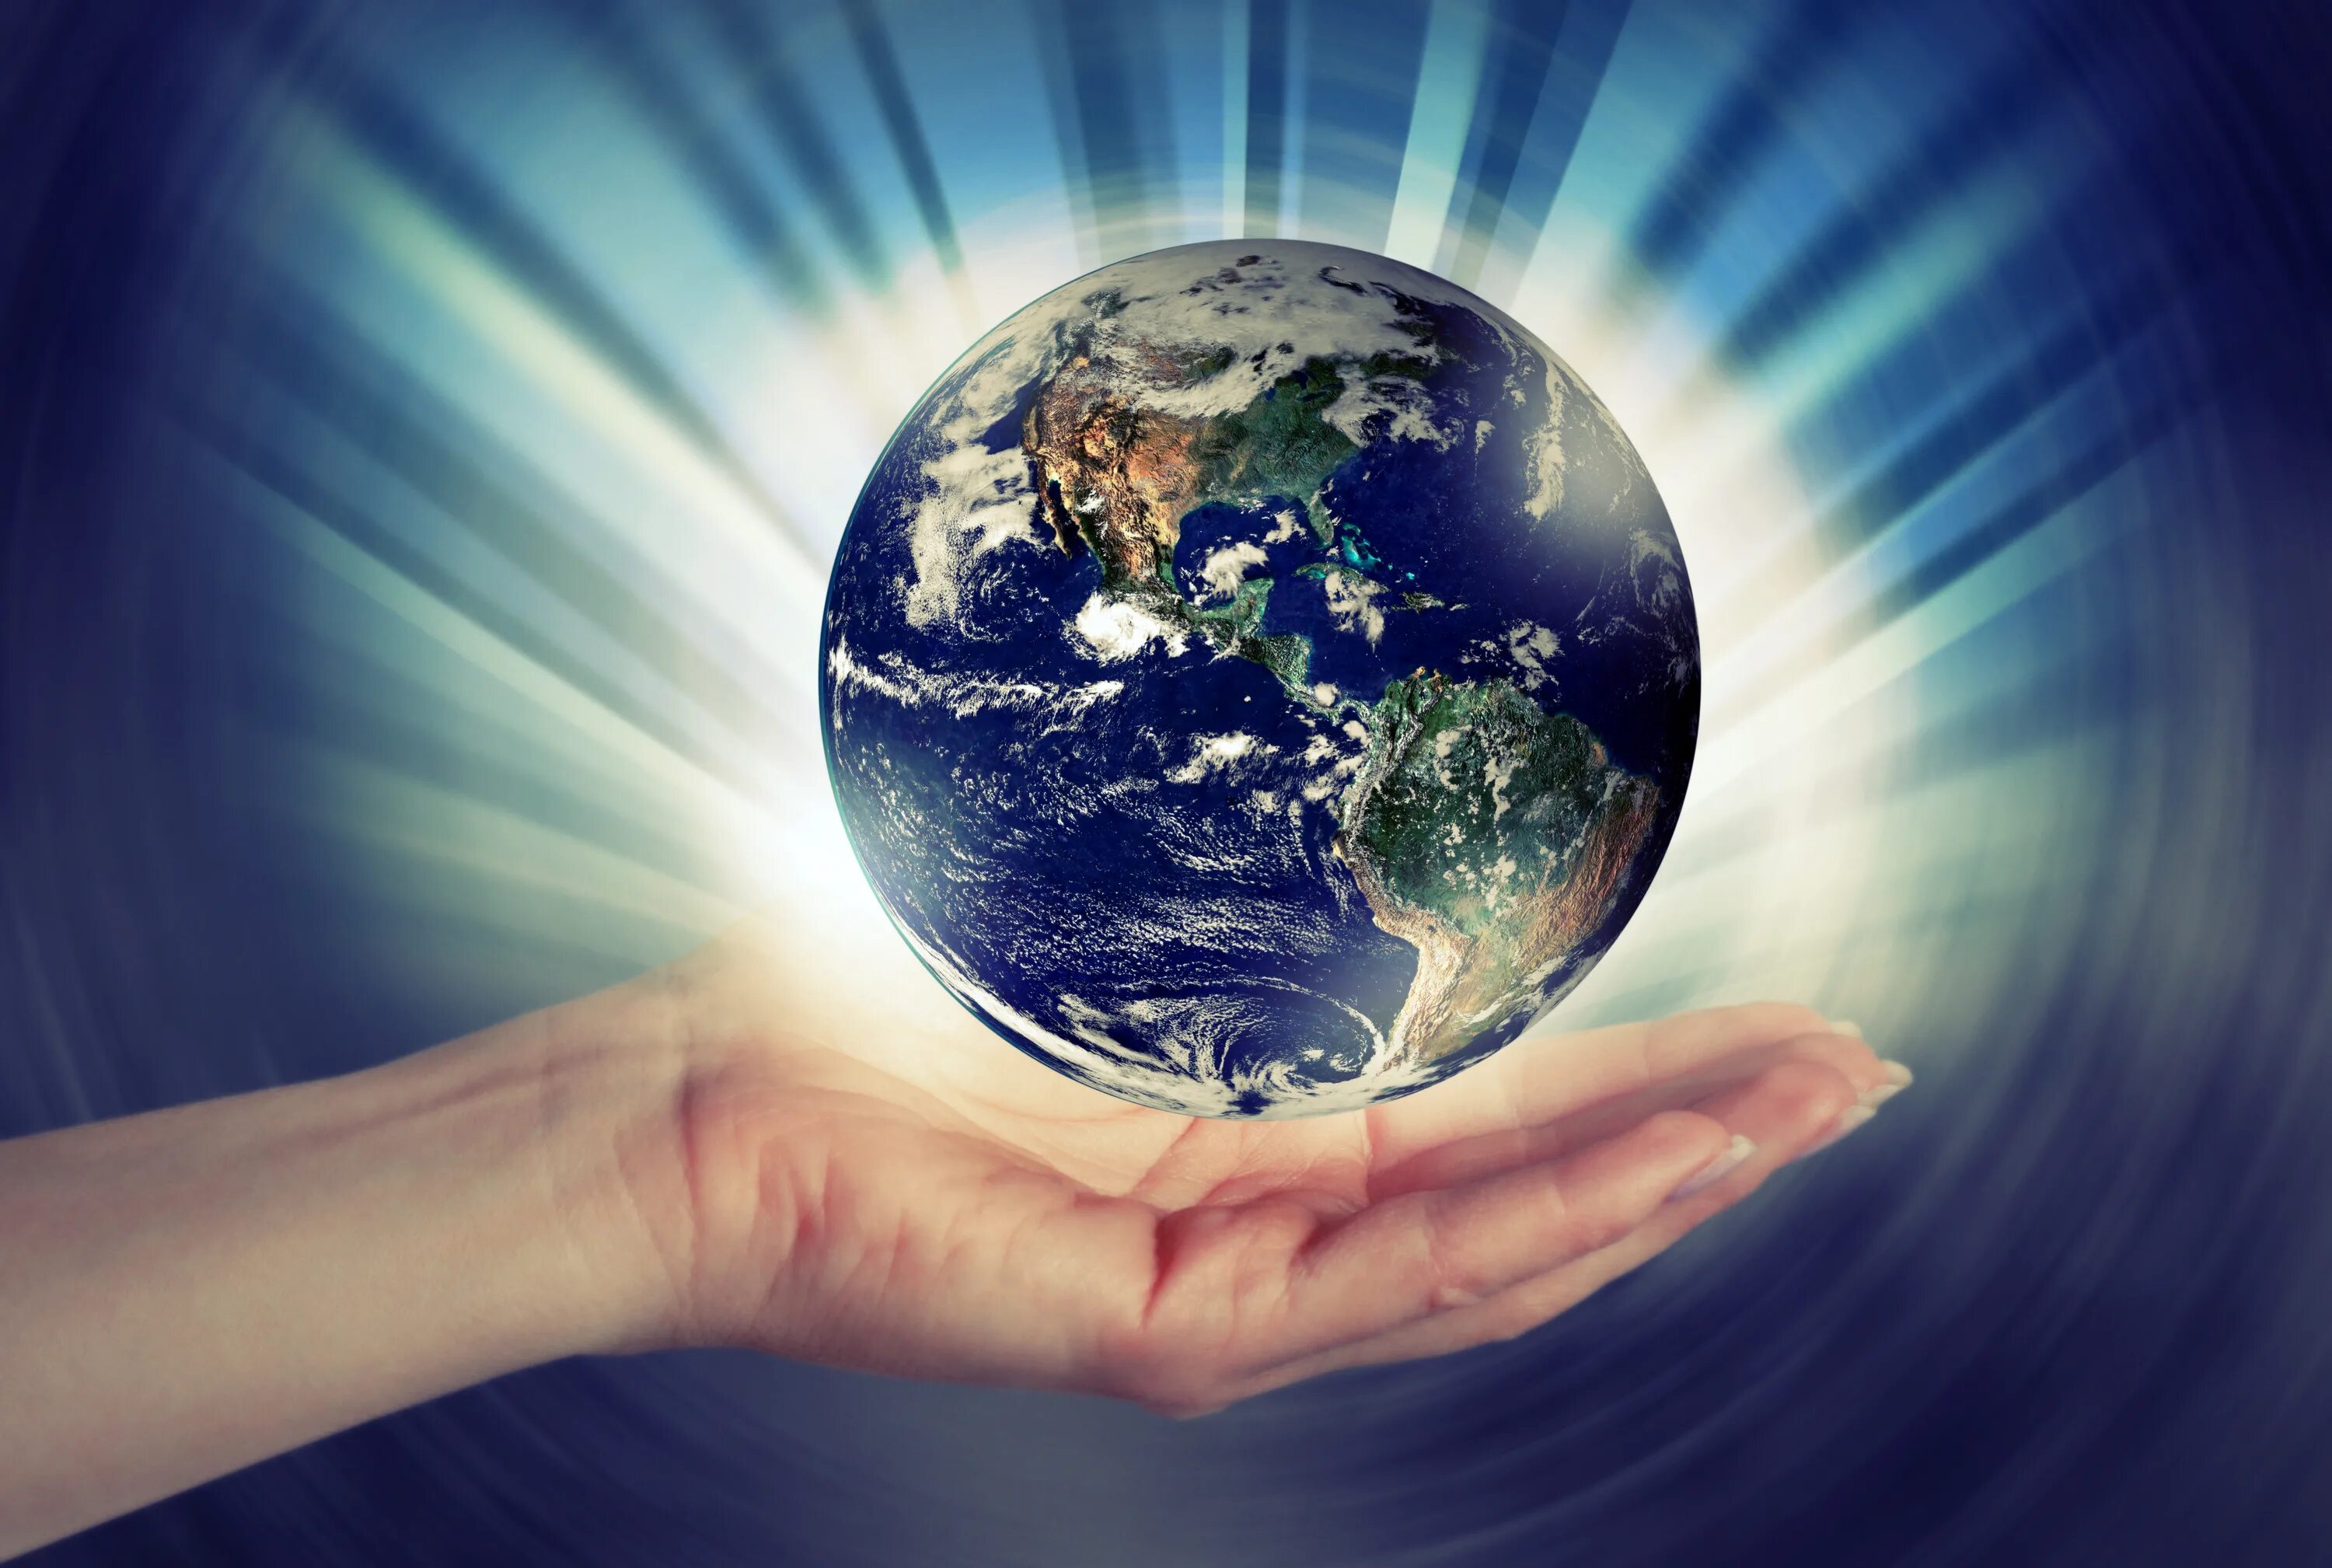 Беседа планета земля. Планета земля в руках. Земной шар в руках. Планета в руках. Планета земля в руках человека.